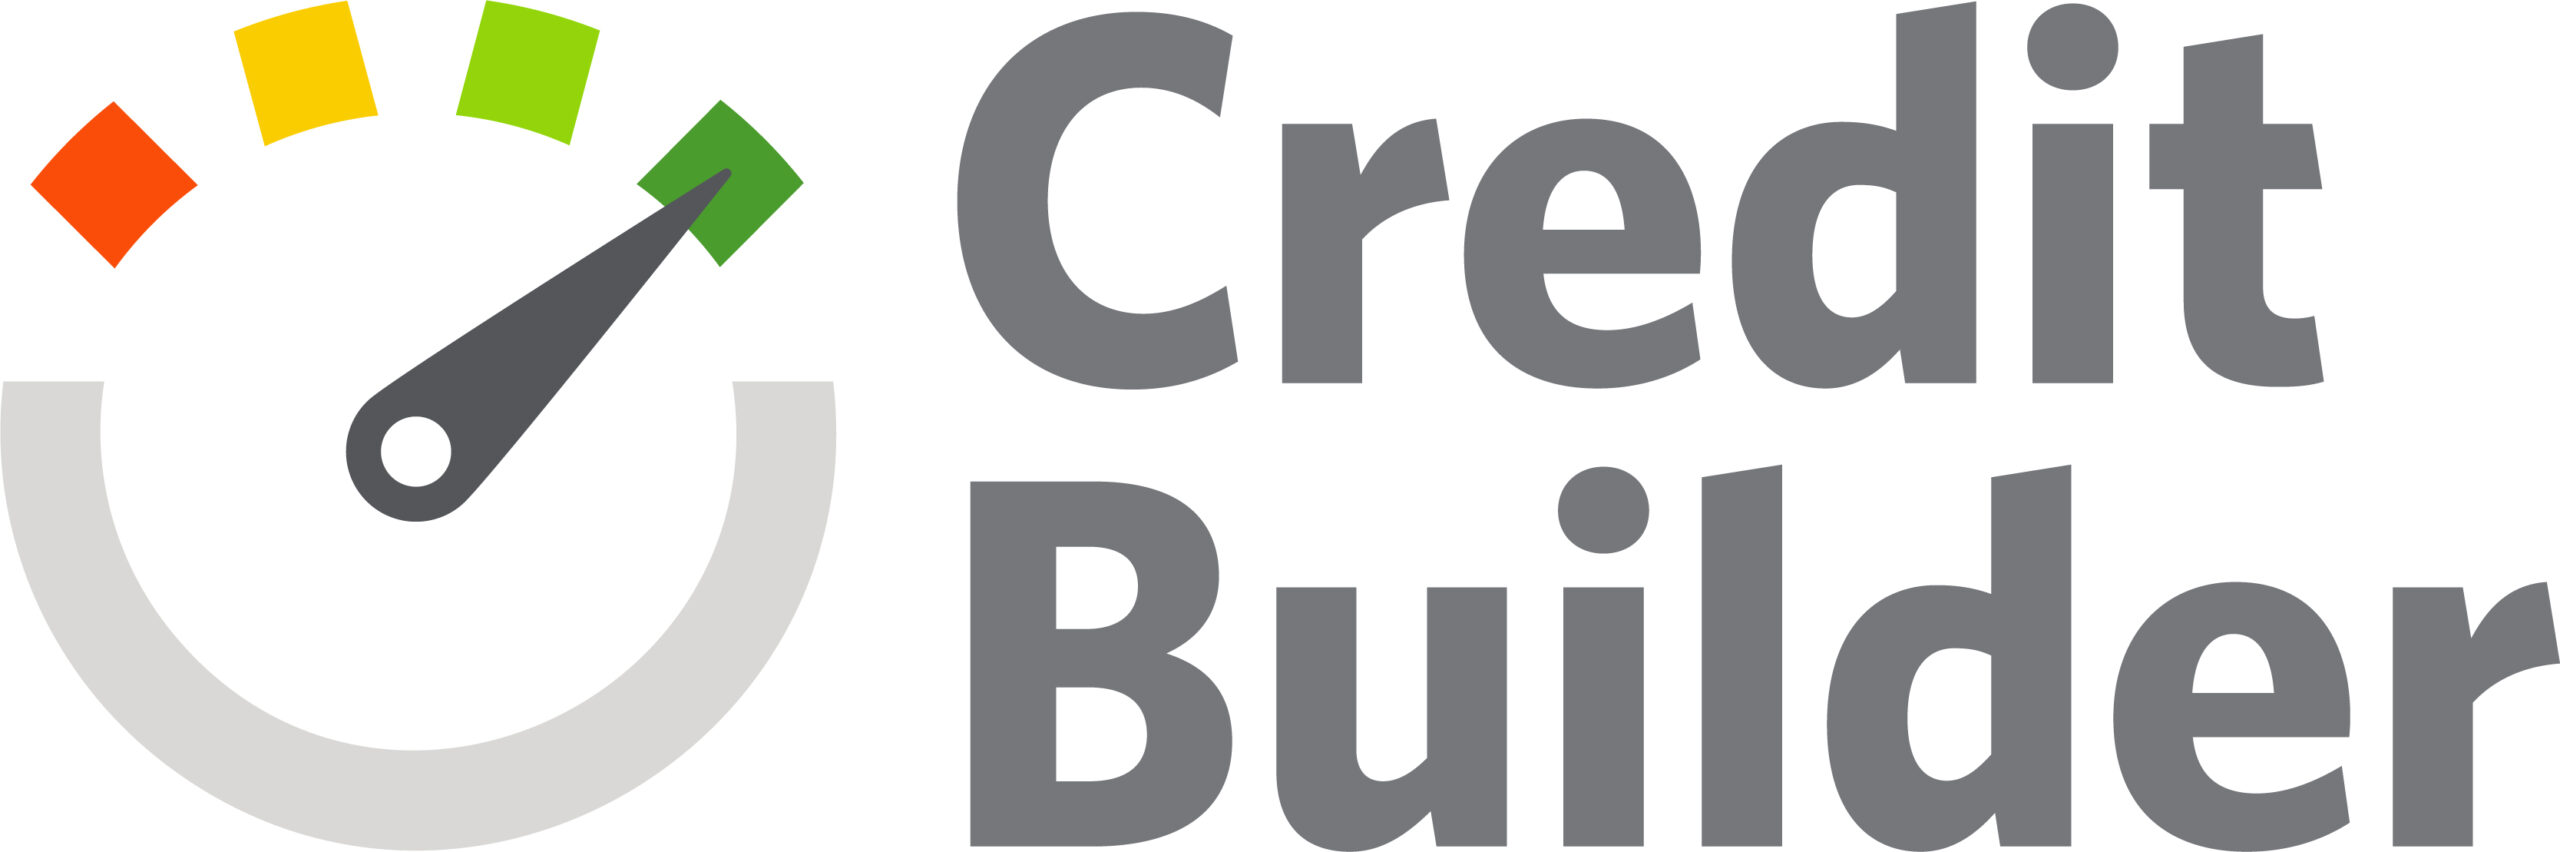 Credit Builder